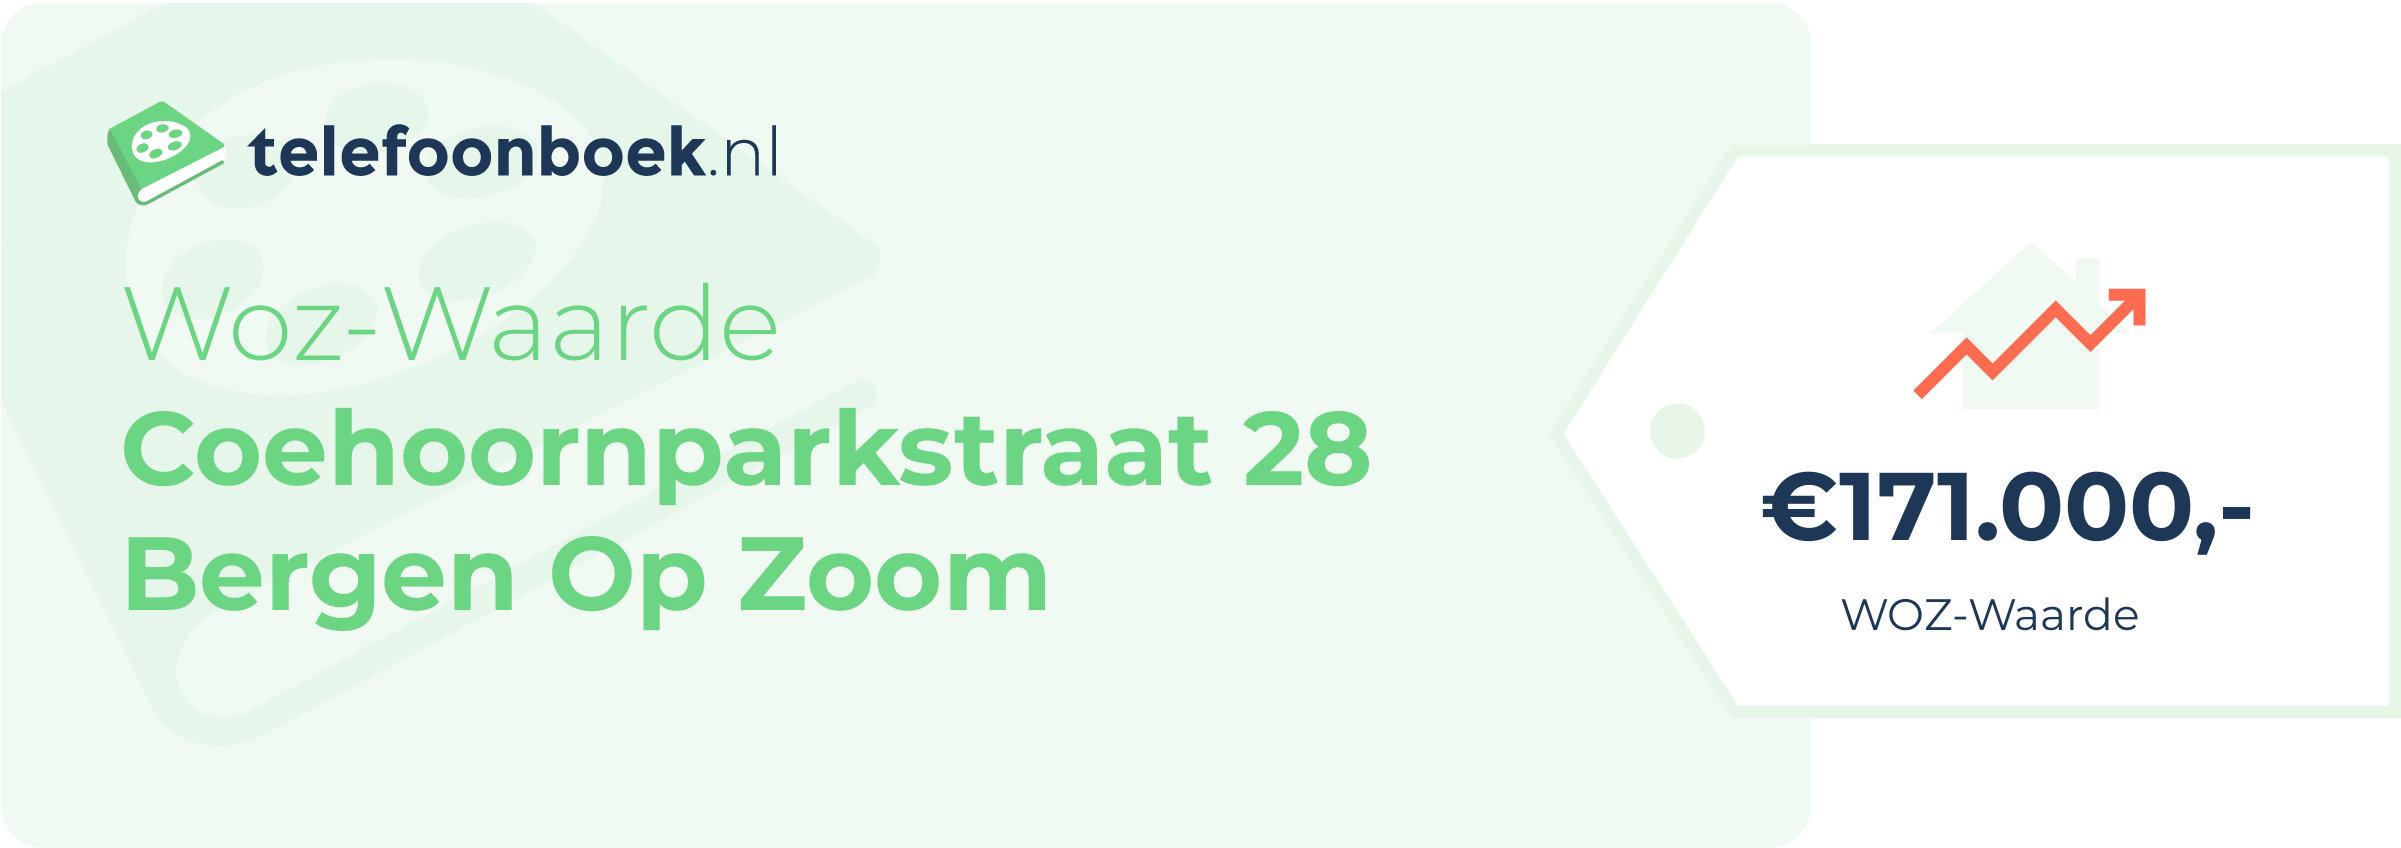 WOZ-waarde Coehoornparkstraat 28 Bergen Op Zoom